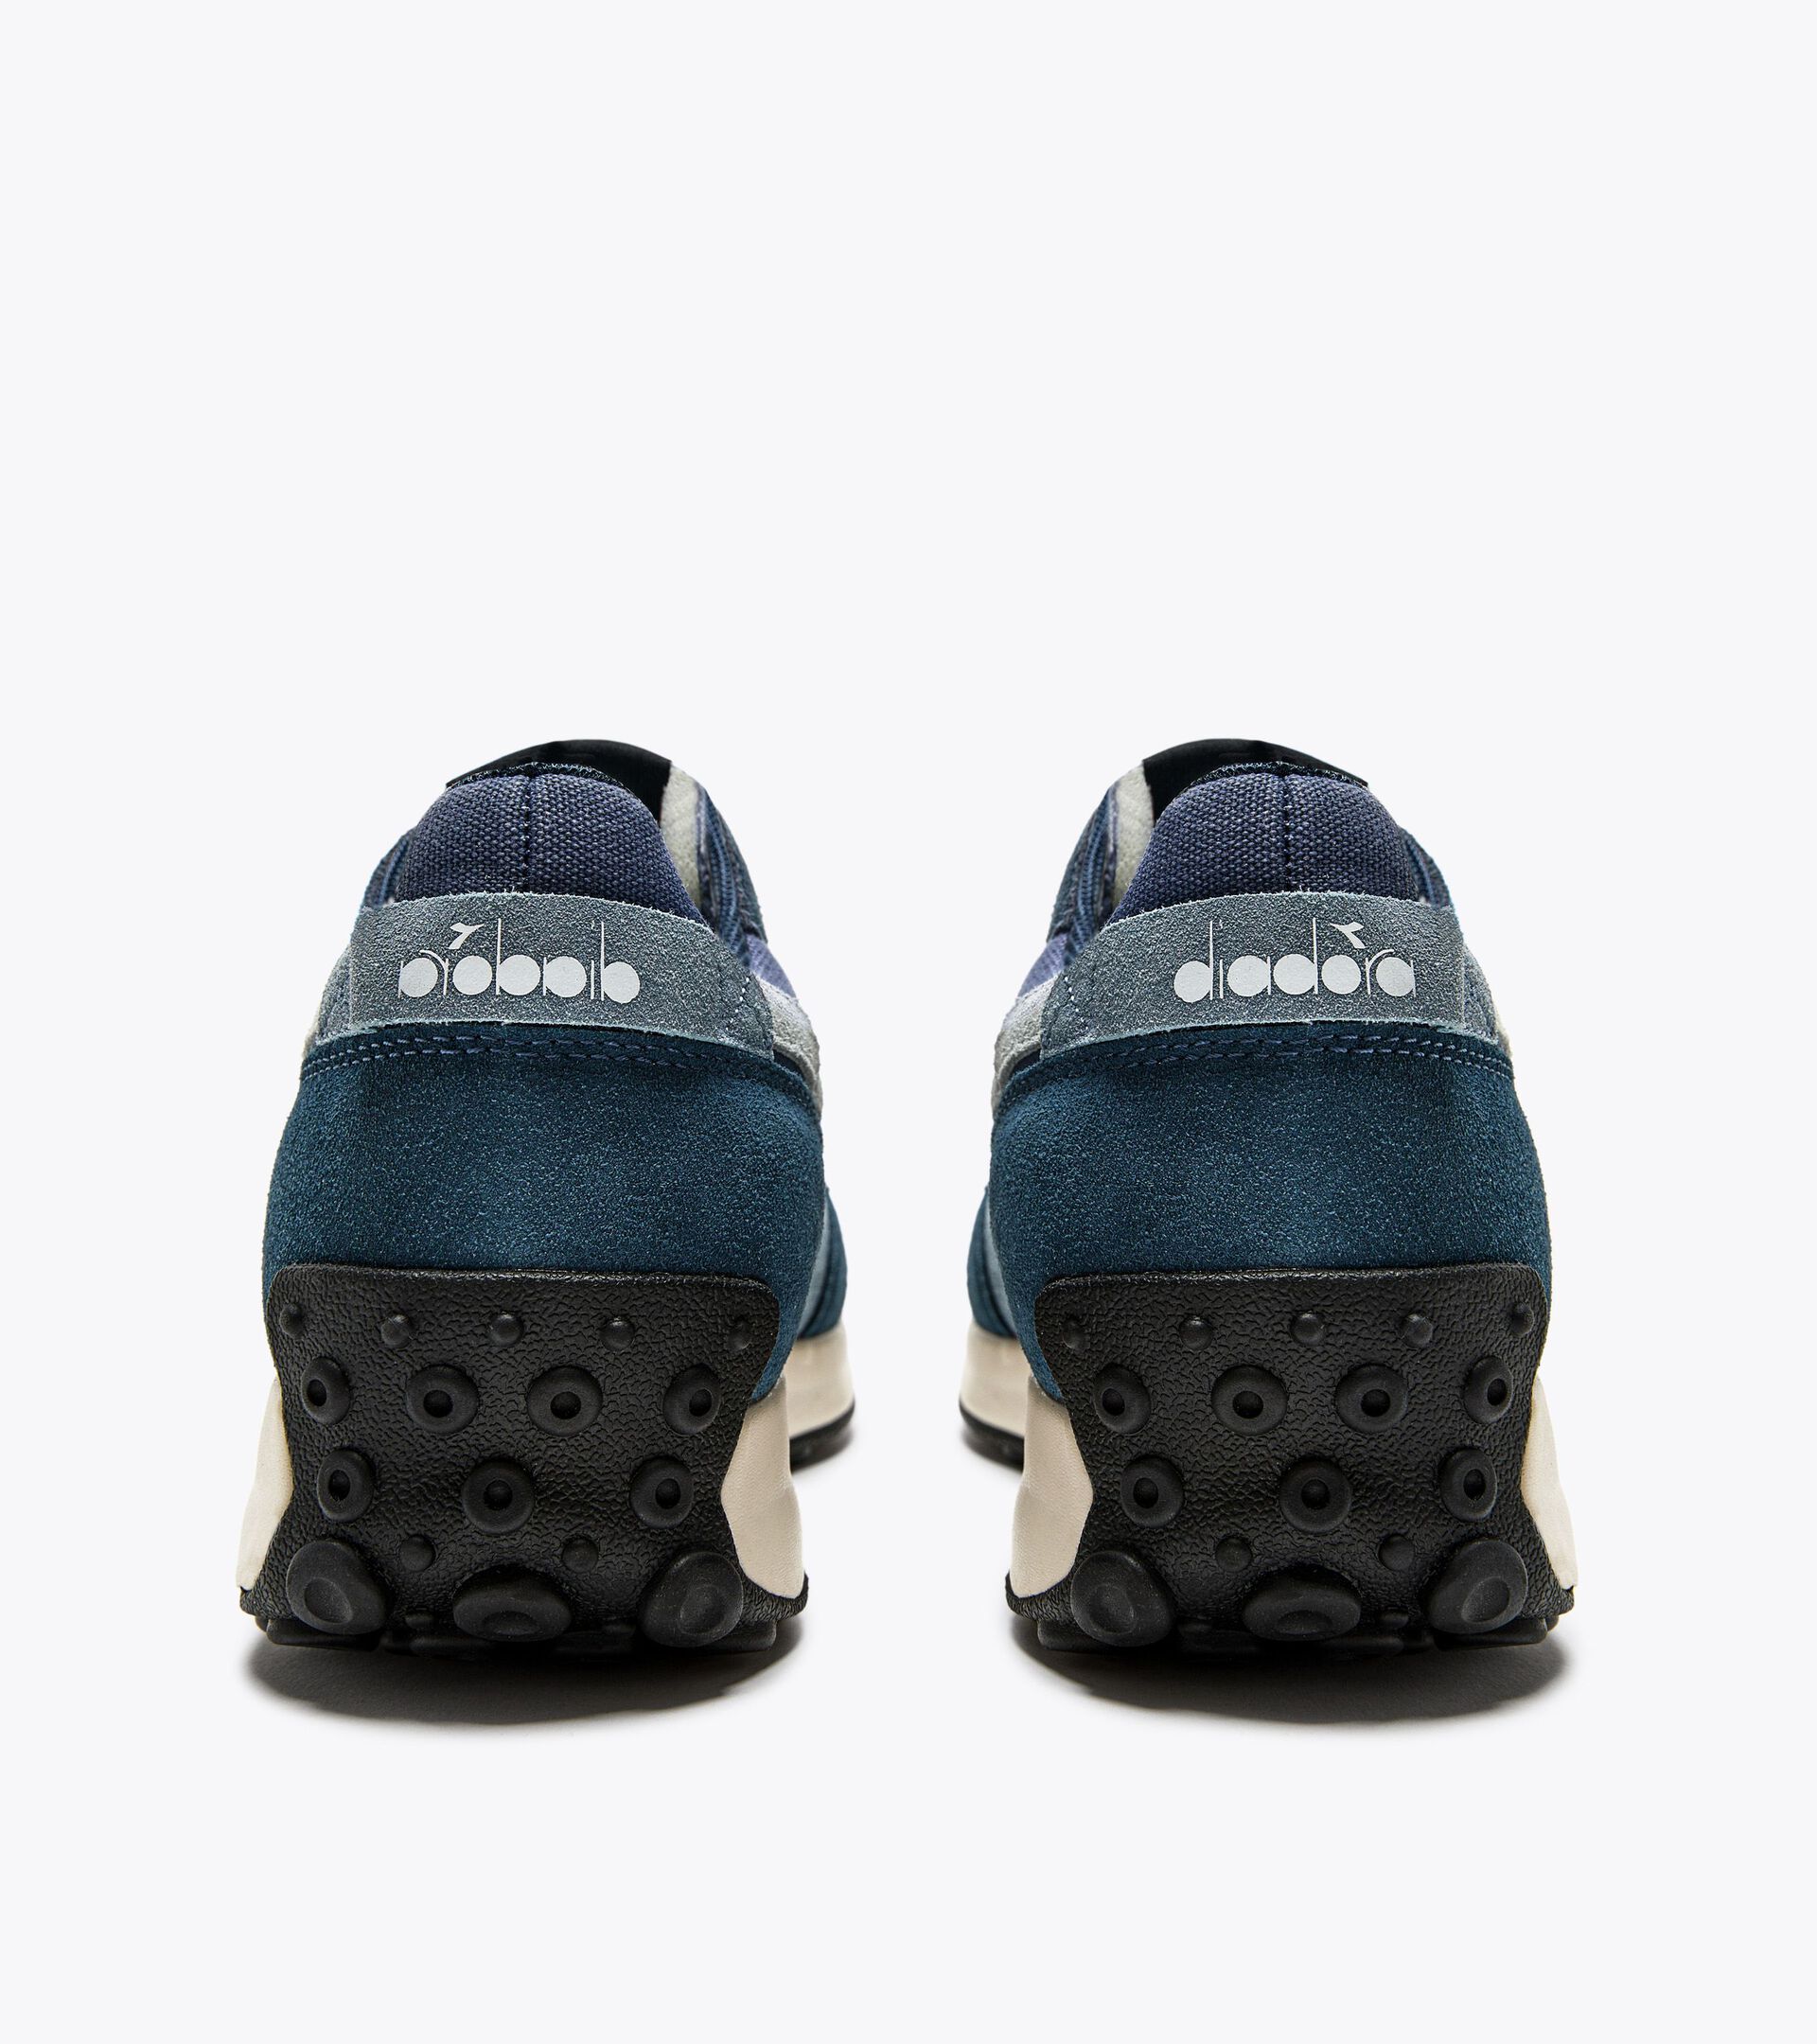 Sporty sneakers - Gender neutral RACE SUEDE SW INSIGNIA BLUE/TRUE NAVY - Diadora